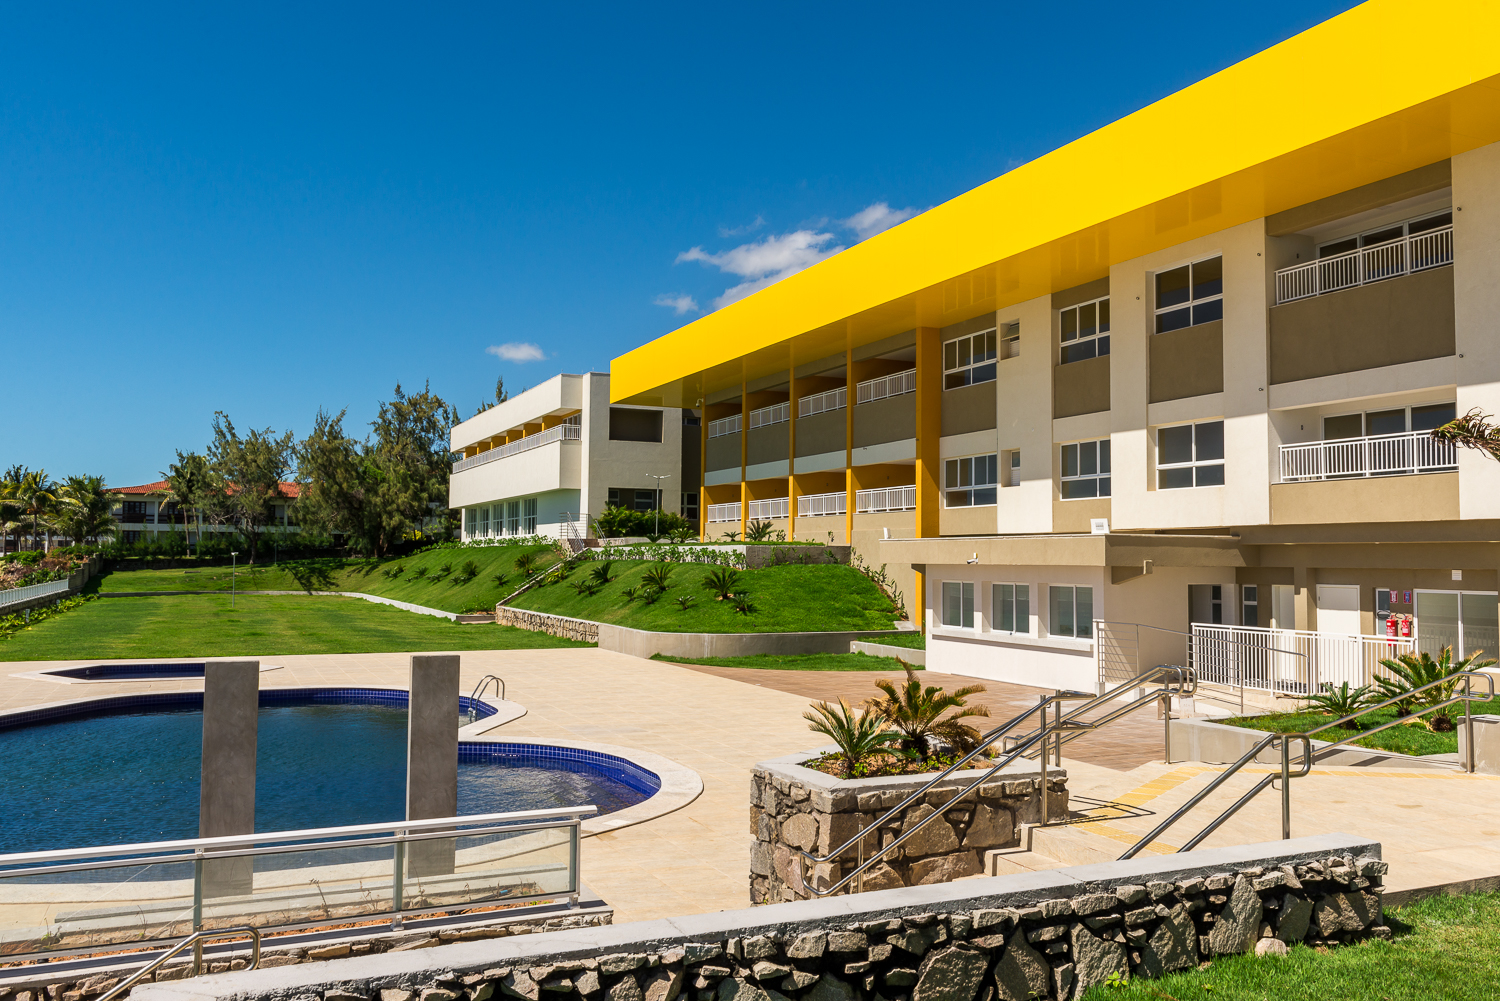 Entrevista hotel-escola SENAC, Natal/RN - Turismologia